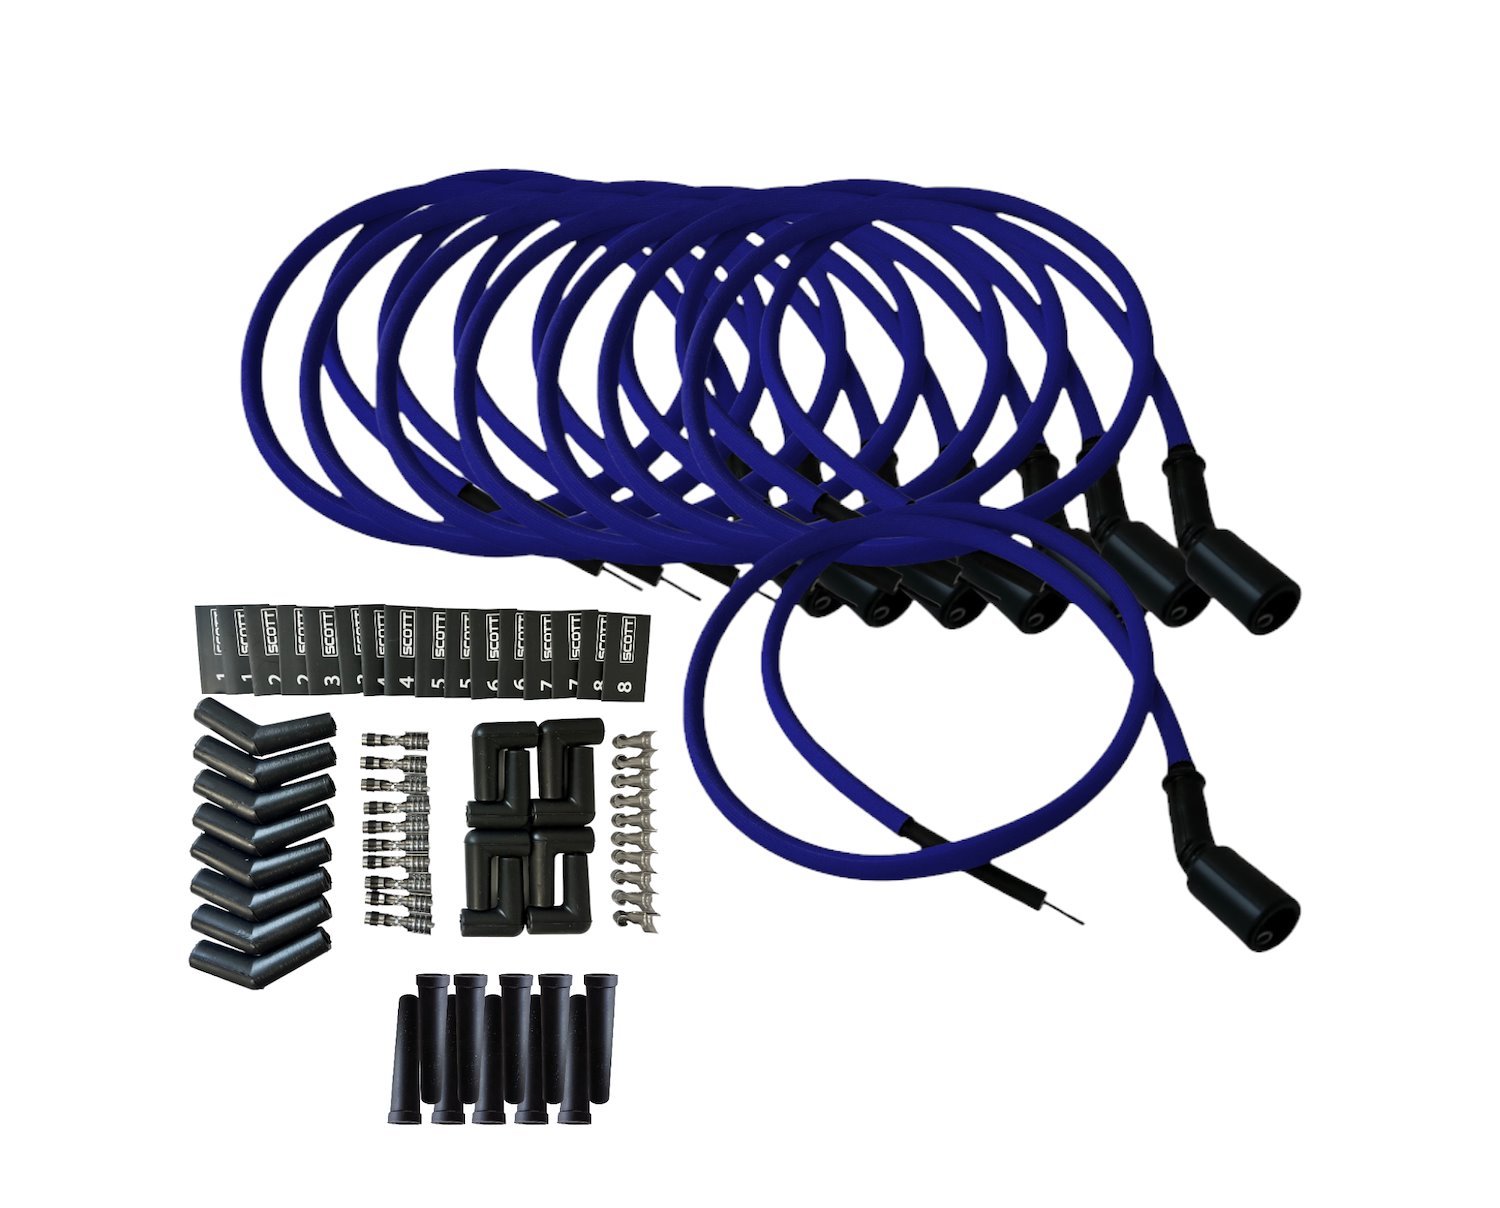 SPW-PS-LSRELO-3 DIY High-Performance Fiberglass-Oversleeved Spark Plug Wire Set for DIY Kits, GM LS [Blue]